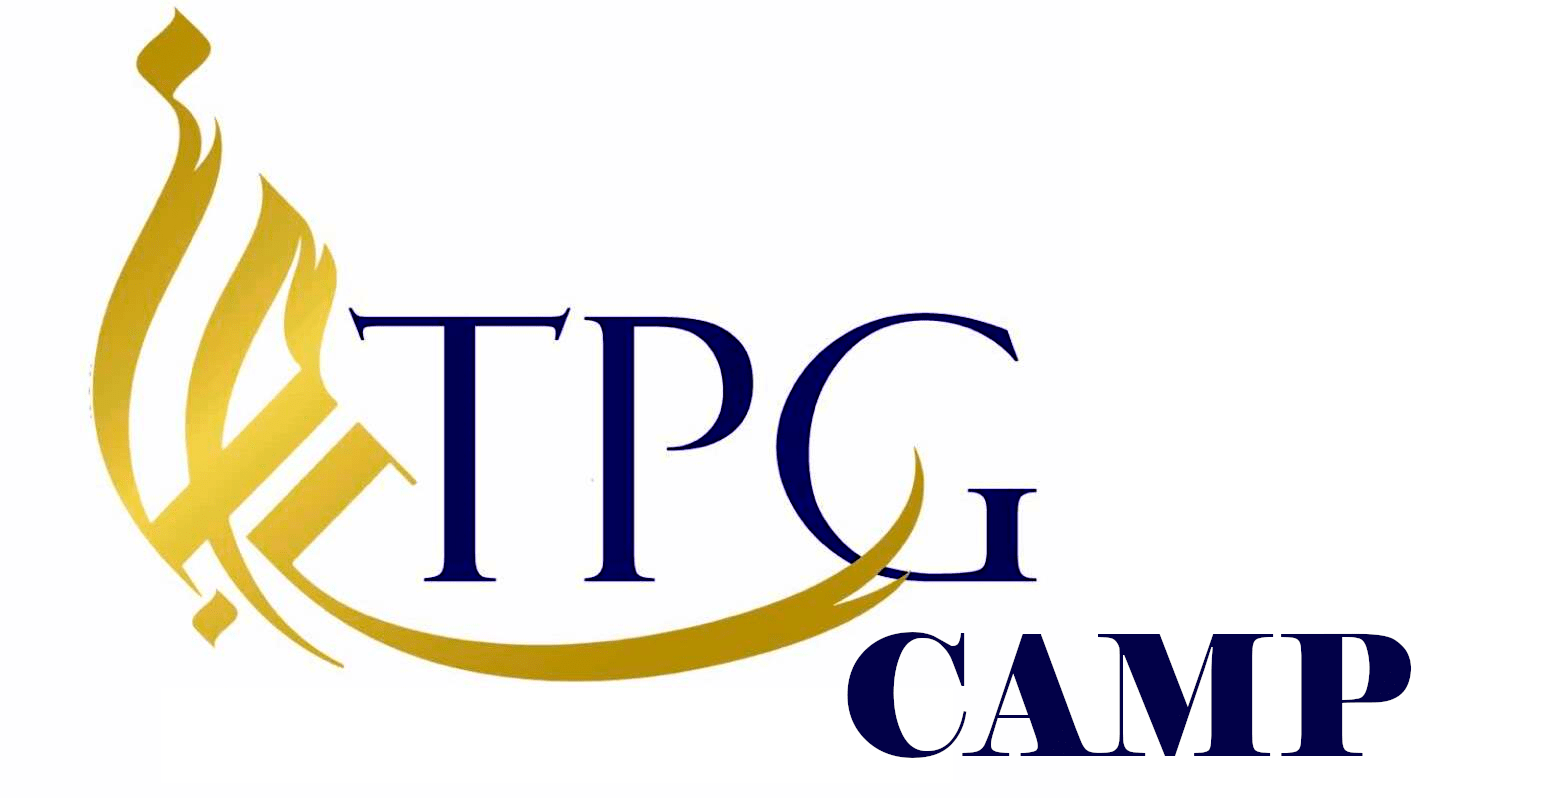 Camp TPG